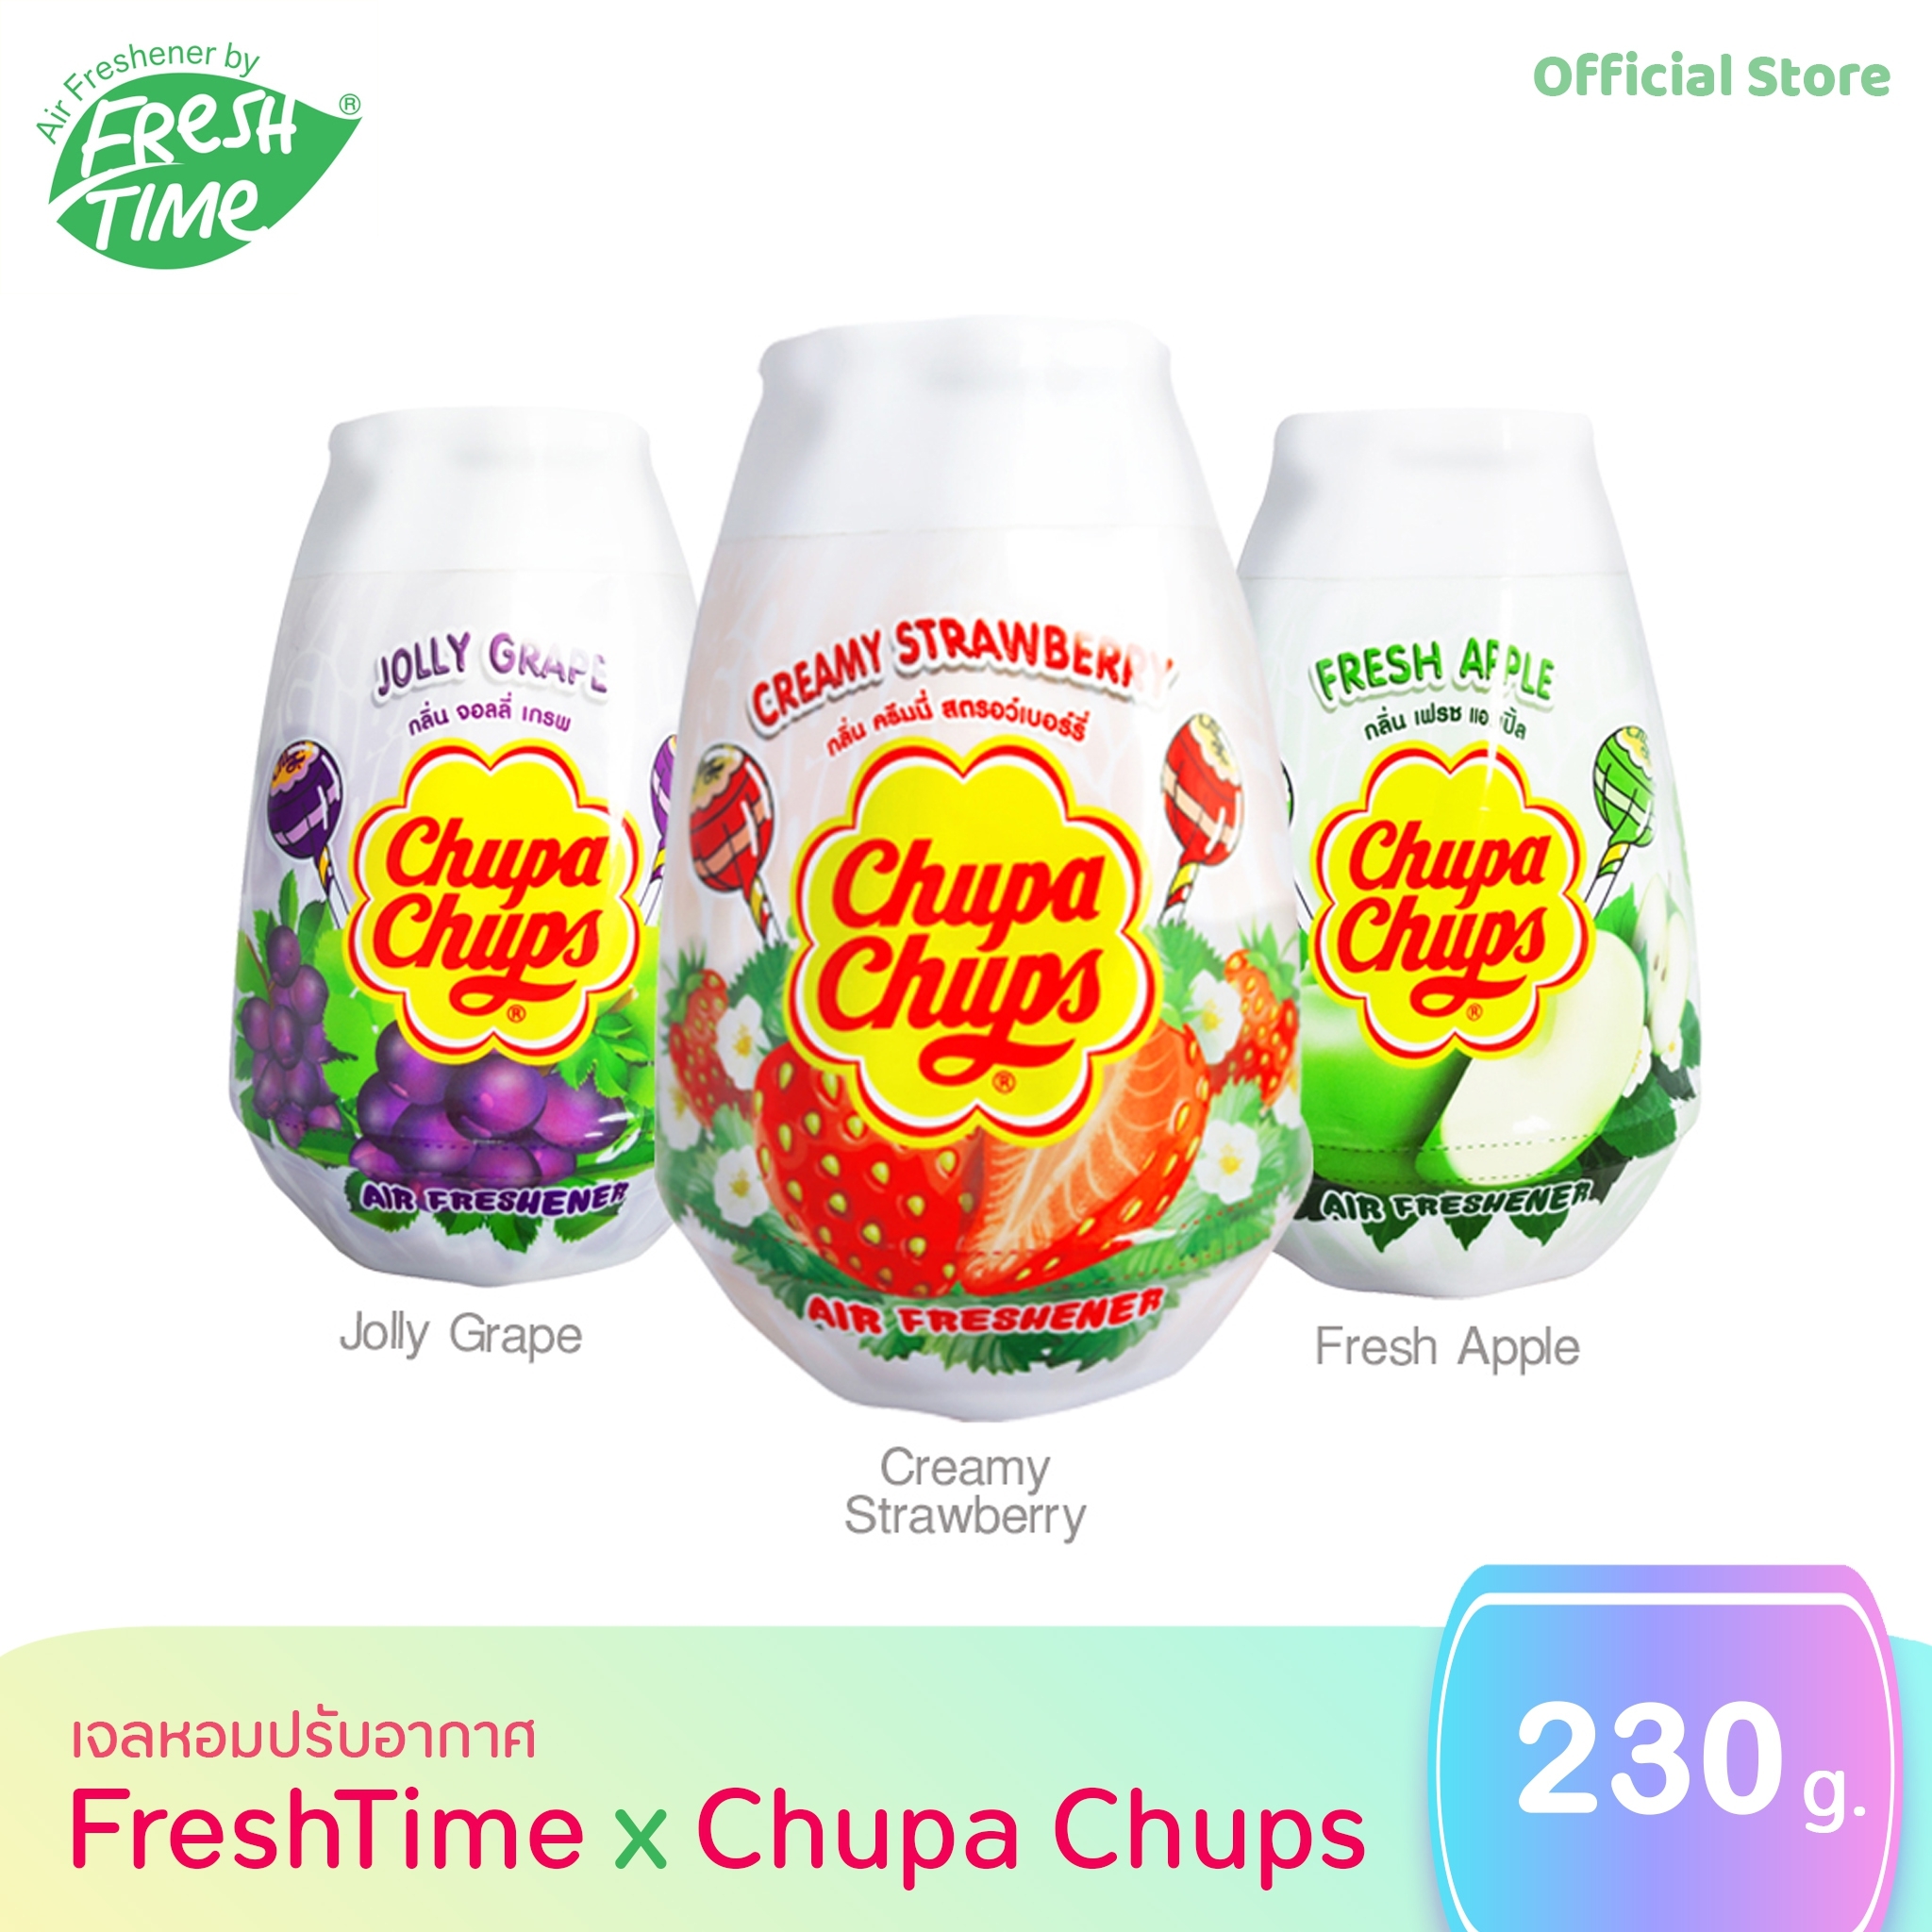 [Best Seller] FreshTime x Chupa Chups เจลหอมปรับอากาศ น้ำหอมปรับอากาศที่สามารถวางได้ทั้งในบ้าน และในรถ ขนาด 230g. มีให้เลือก 3 กลิ่น